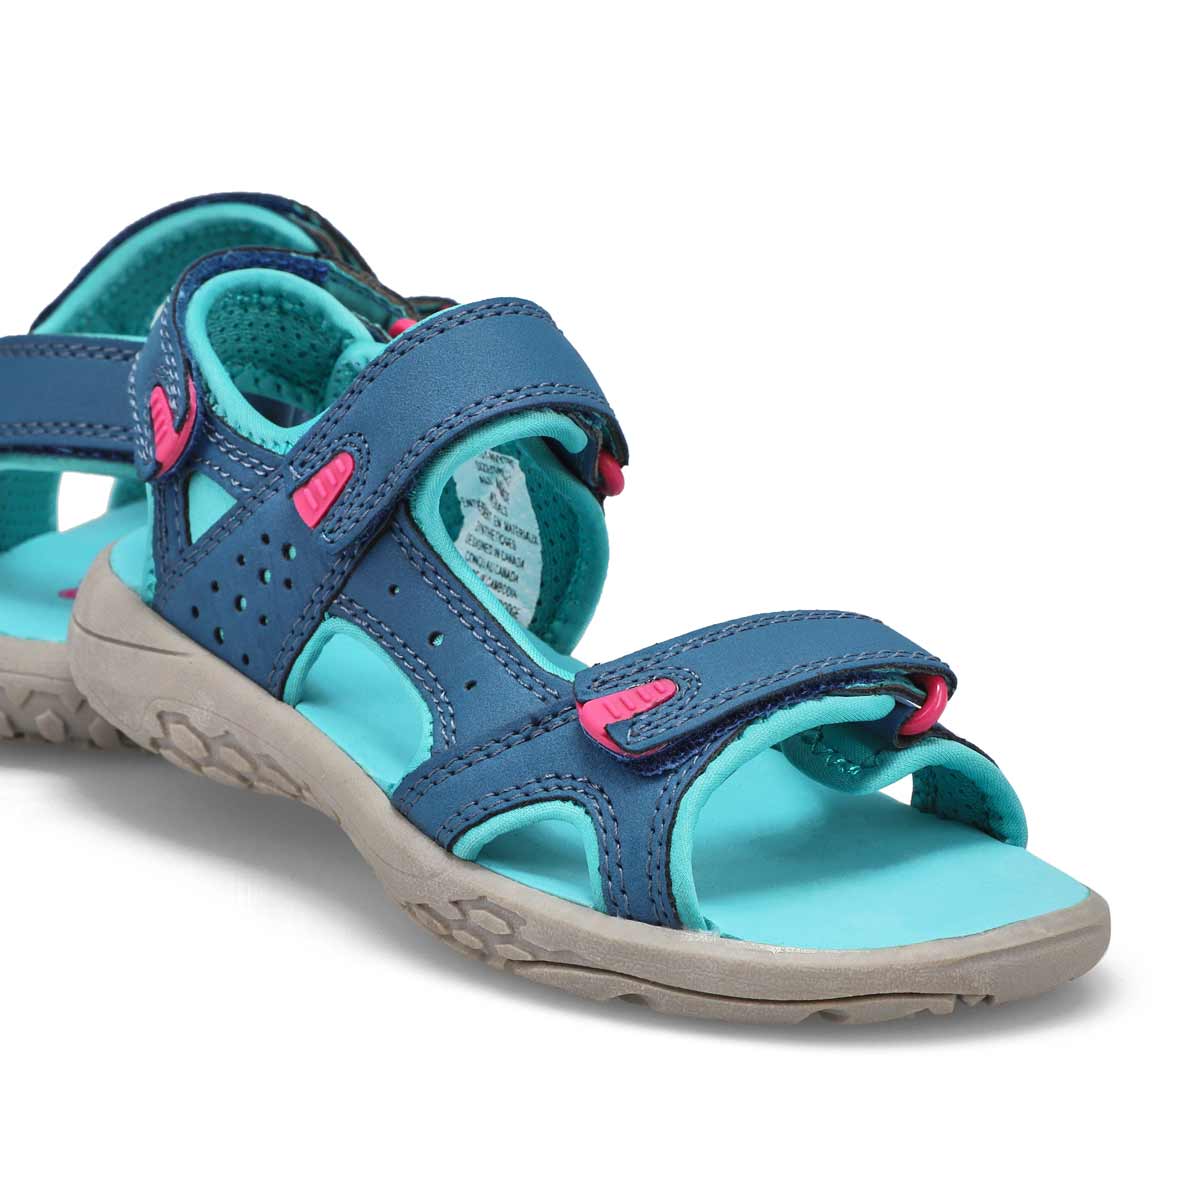 Sandale sport DAISY, marine/turquoise, filles